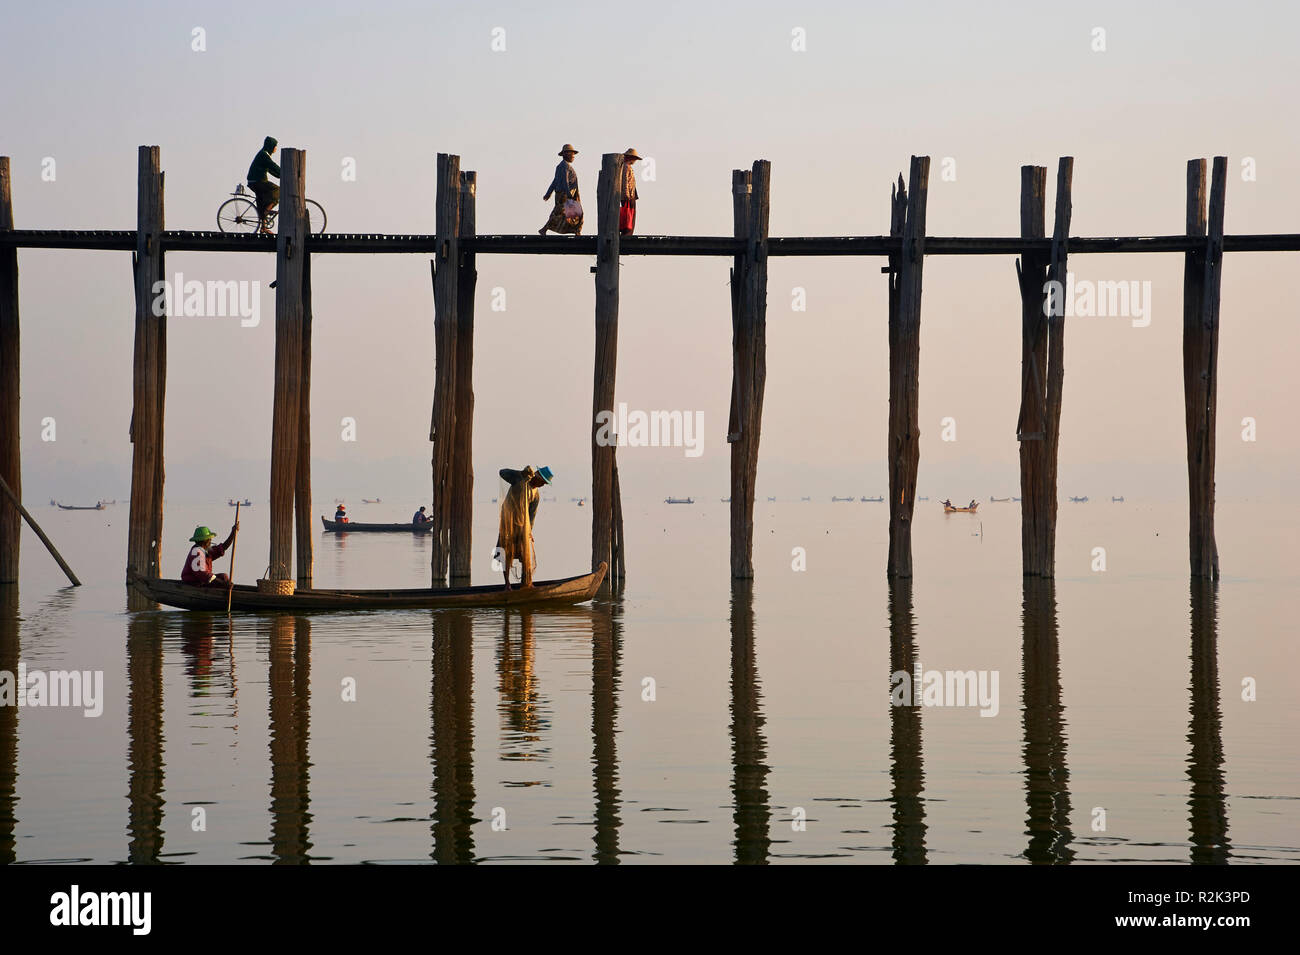 People on the U Bein Bridge, Myanmar, Asia, Stock Photo